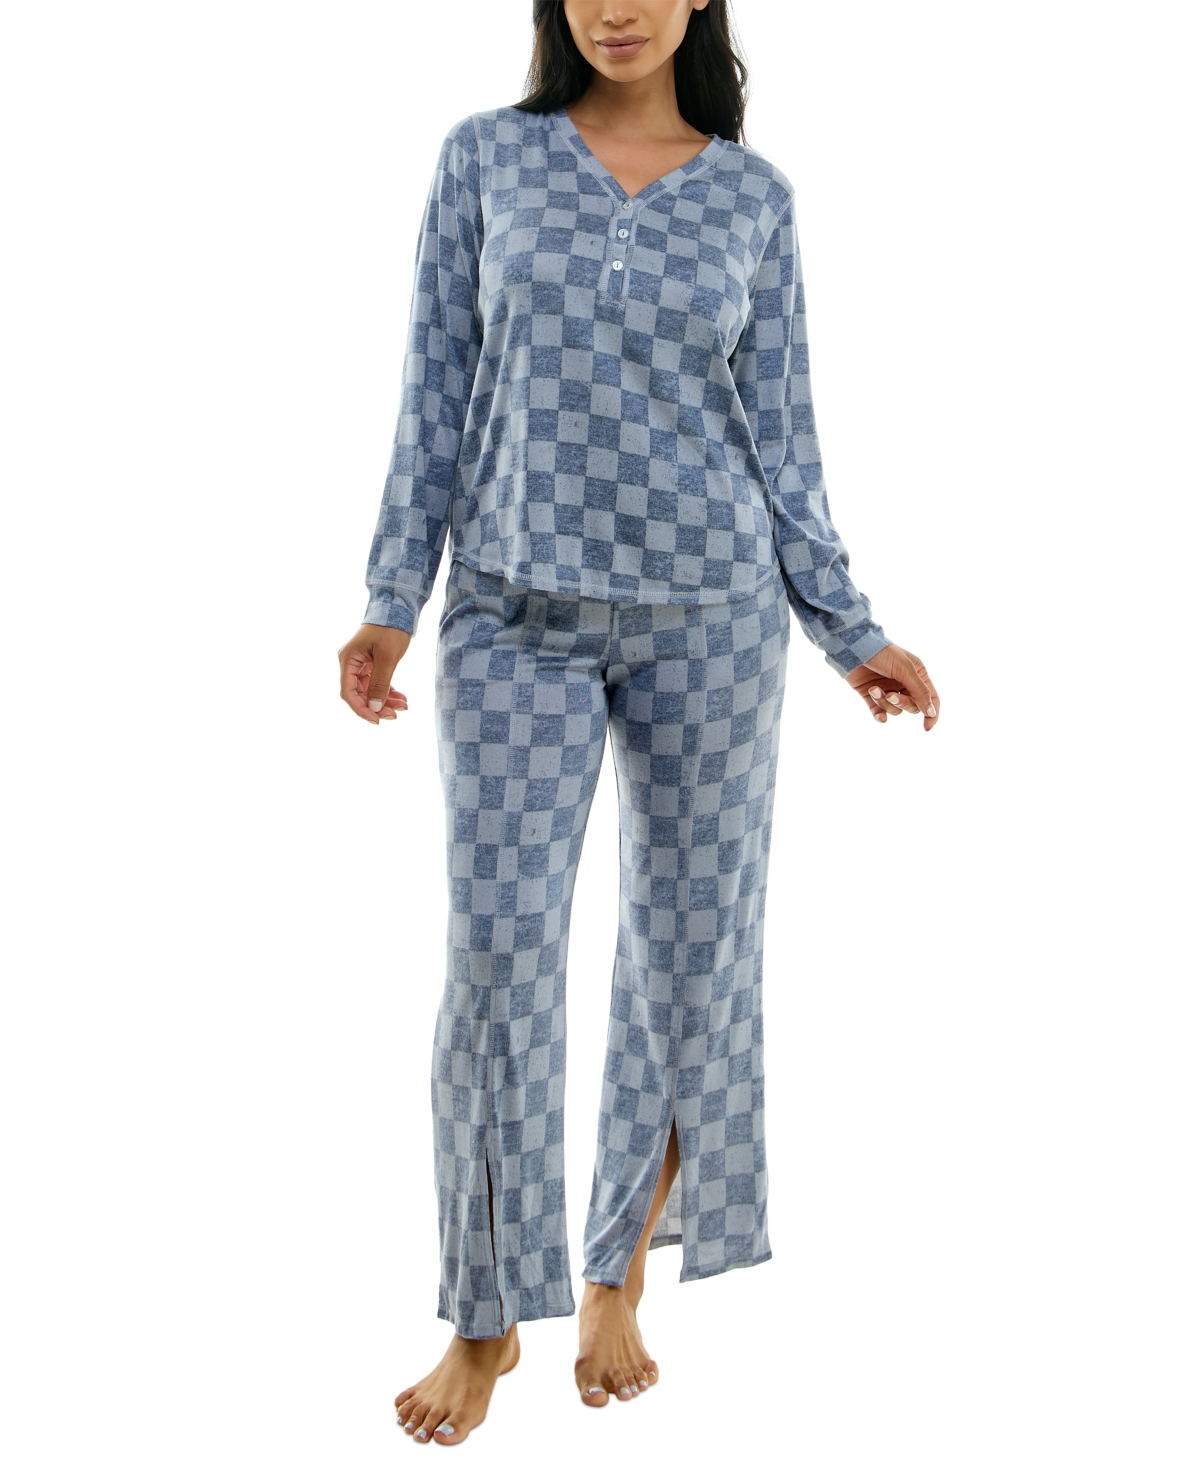 Roudelain Women's 2-pc. Printed Henley Pajamas Set In Laurel Checker